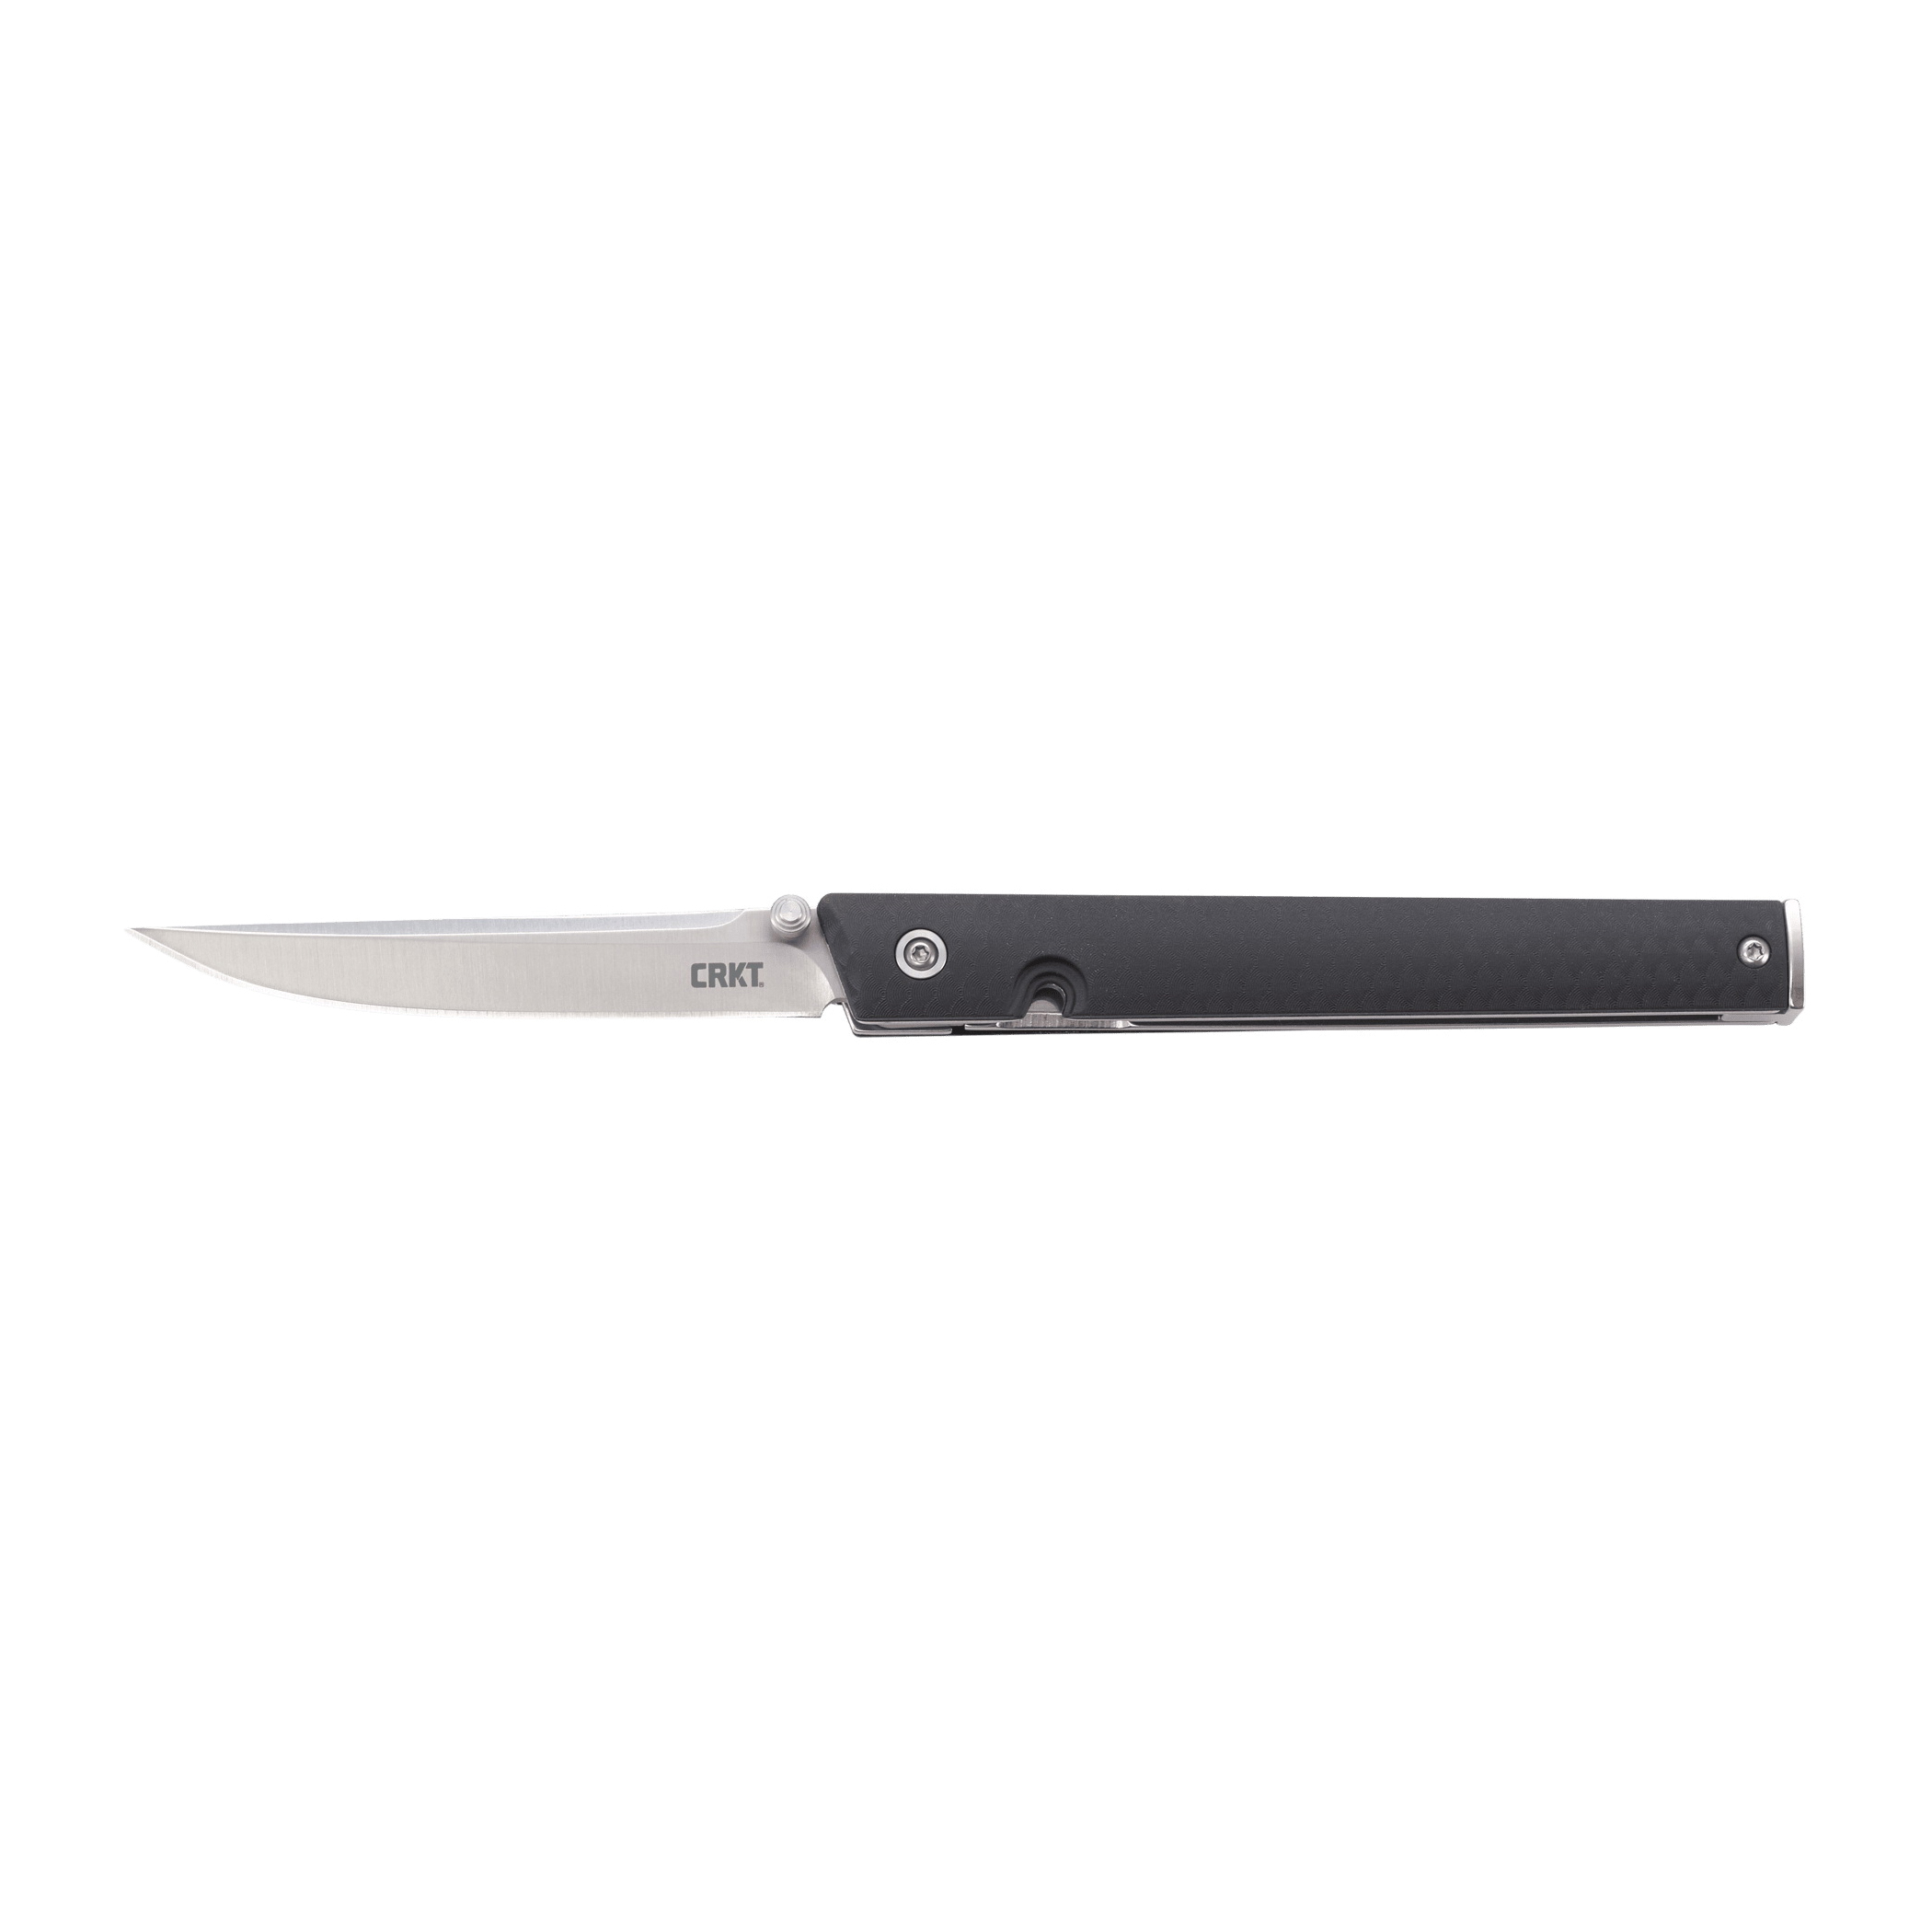 Endorser 7096 CEO Folding Knife, 3.11 in L Blade, Steel Blade - 1